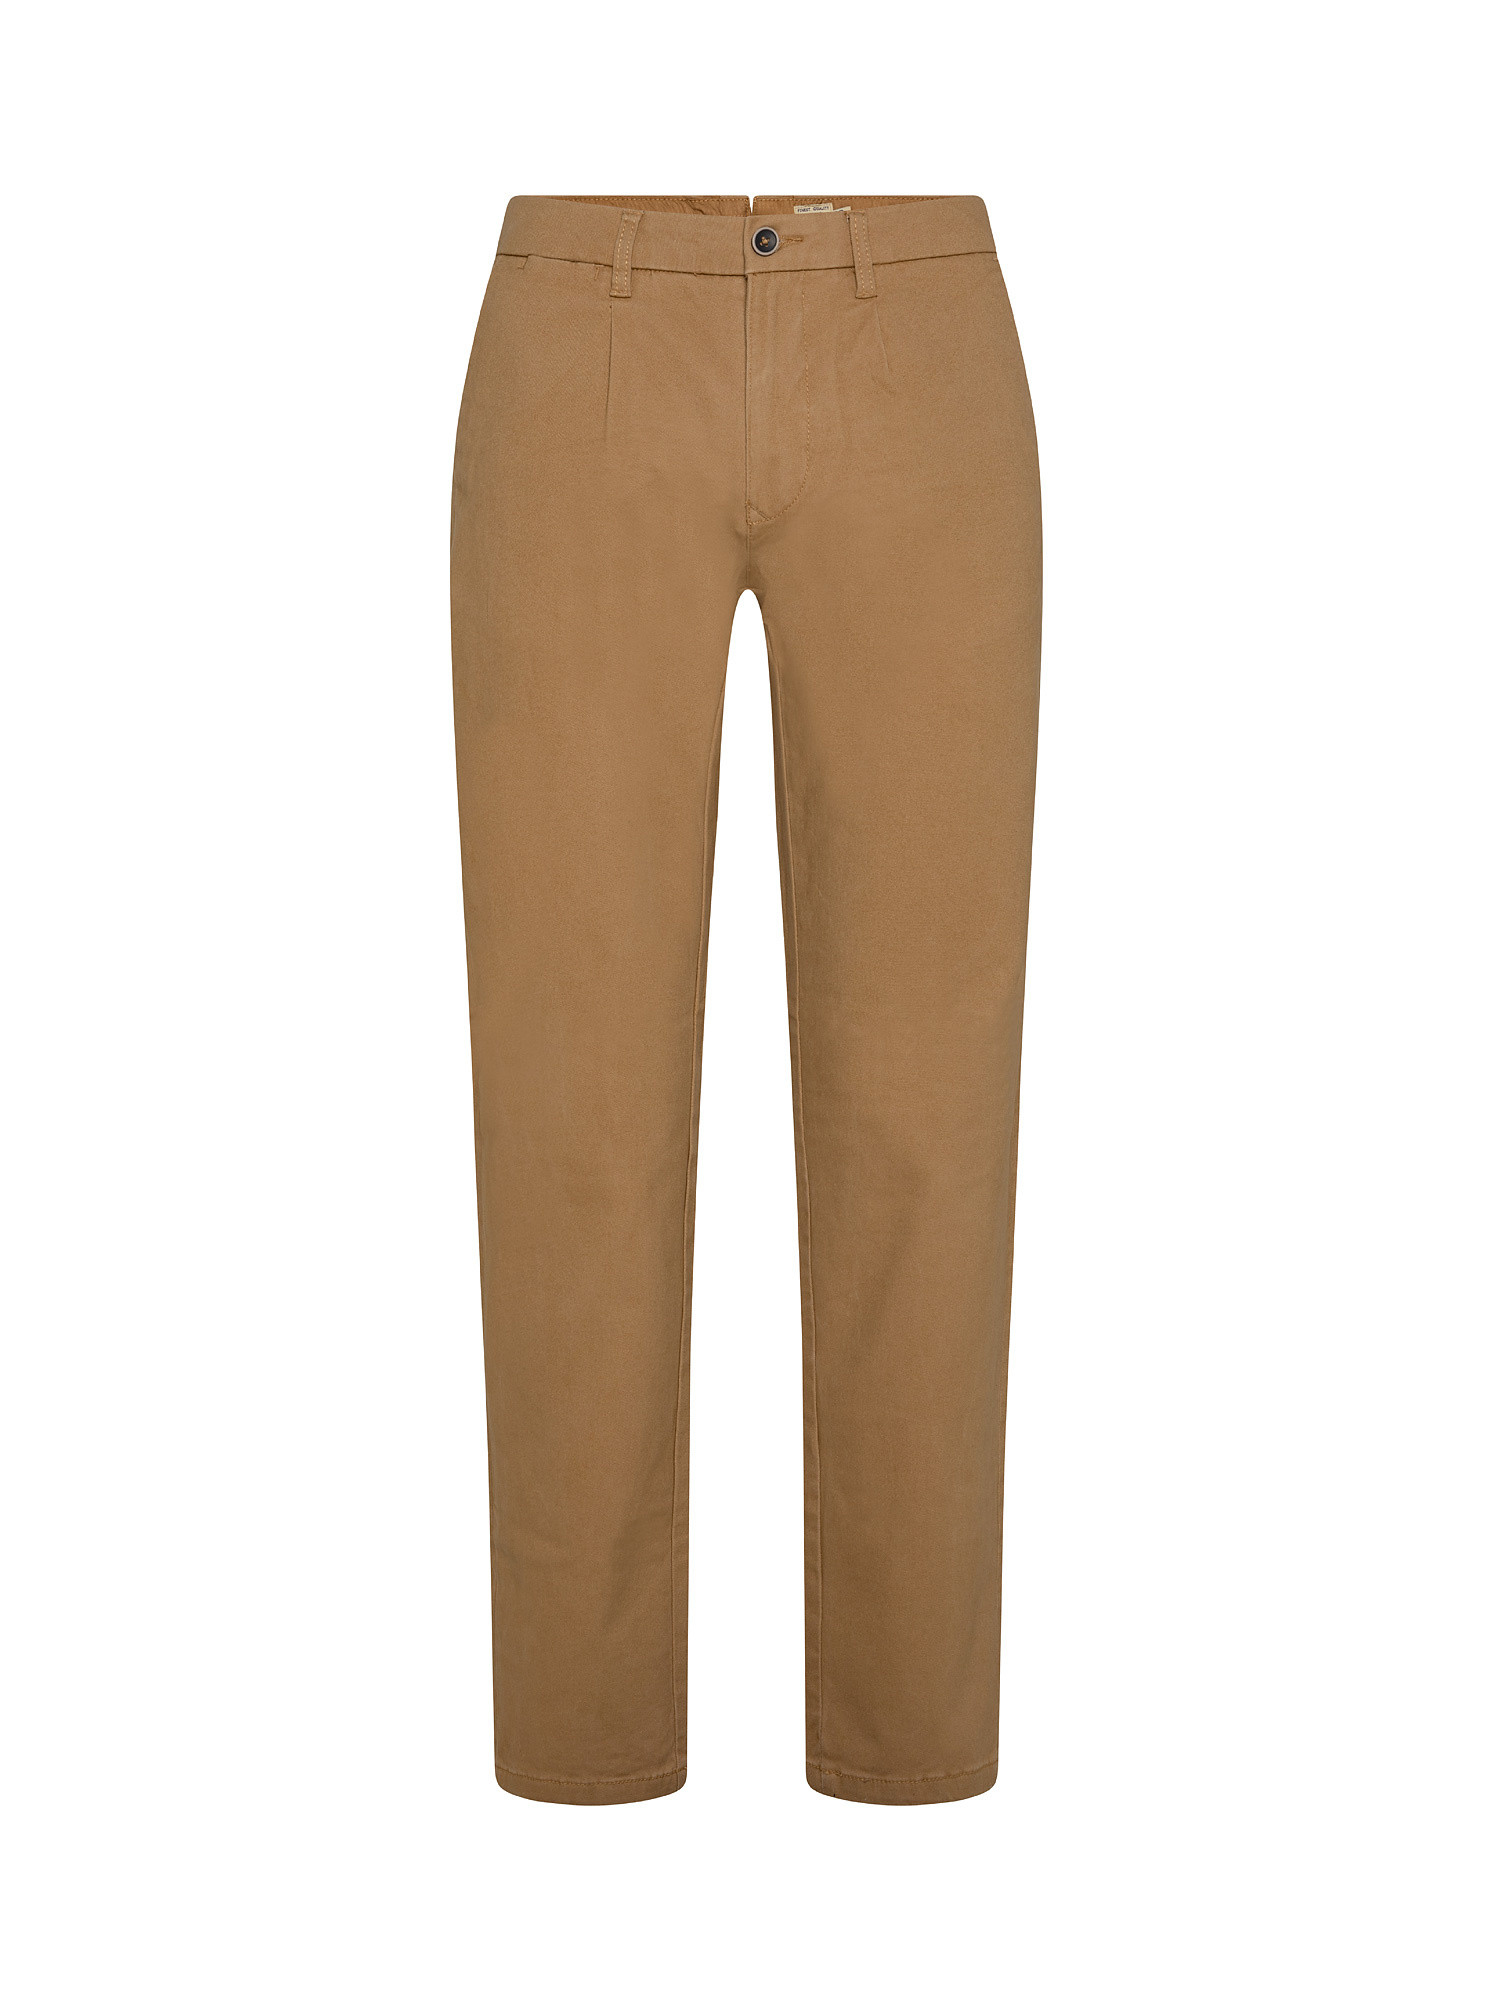 Pantalone chino, Marrone chiaro, large image number 0